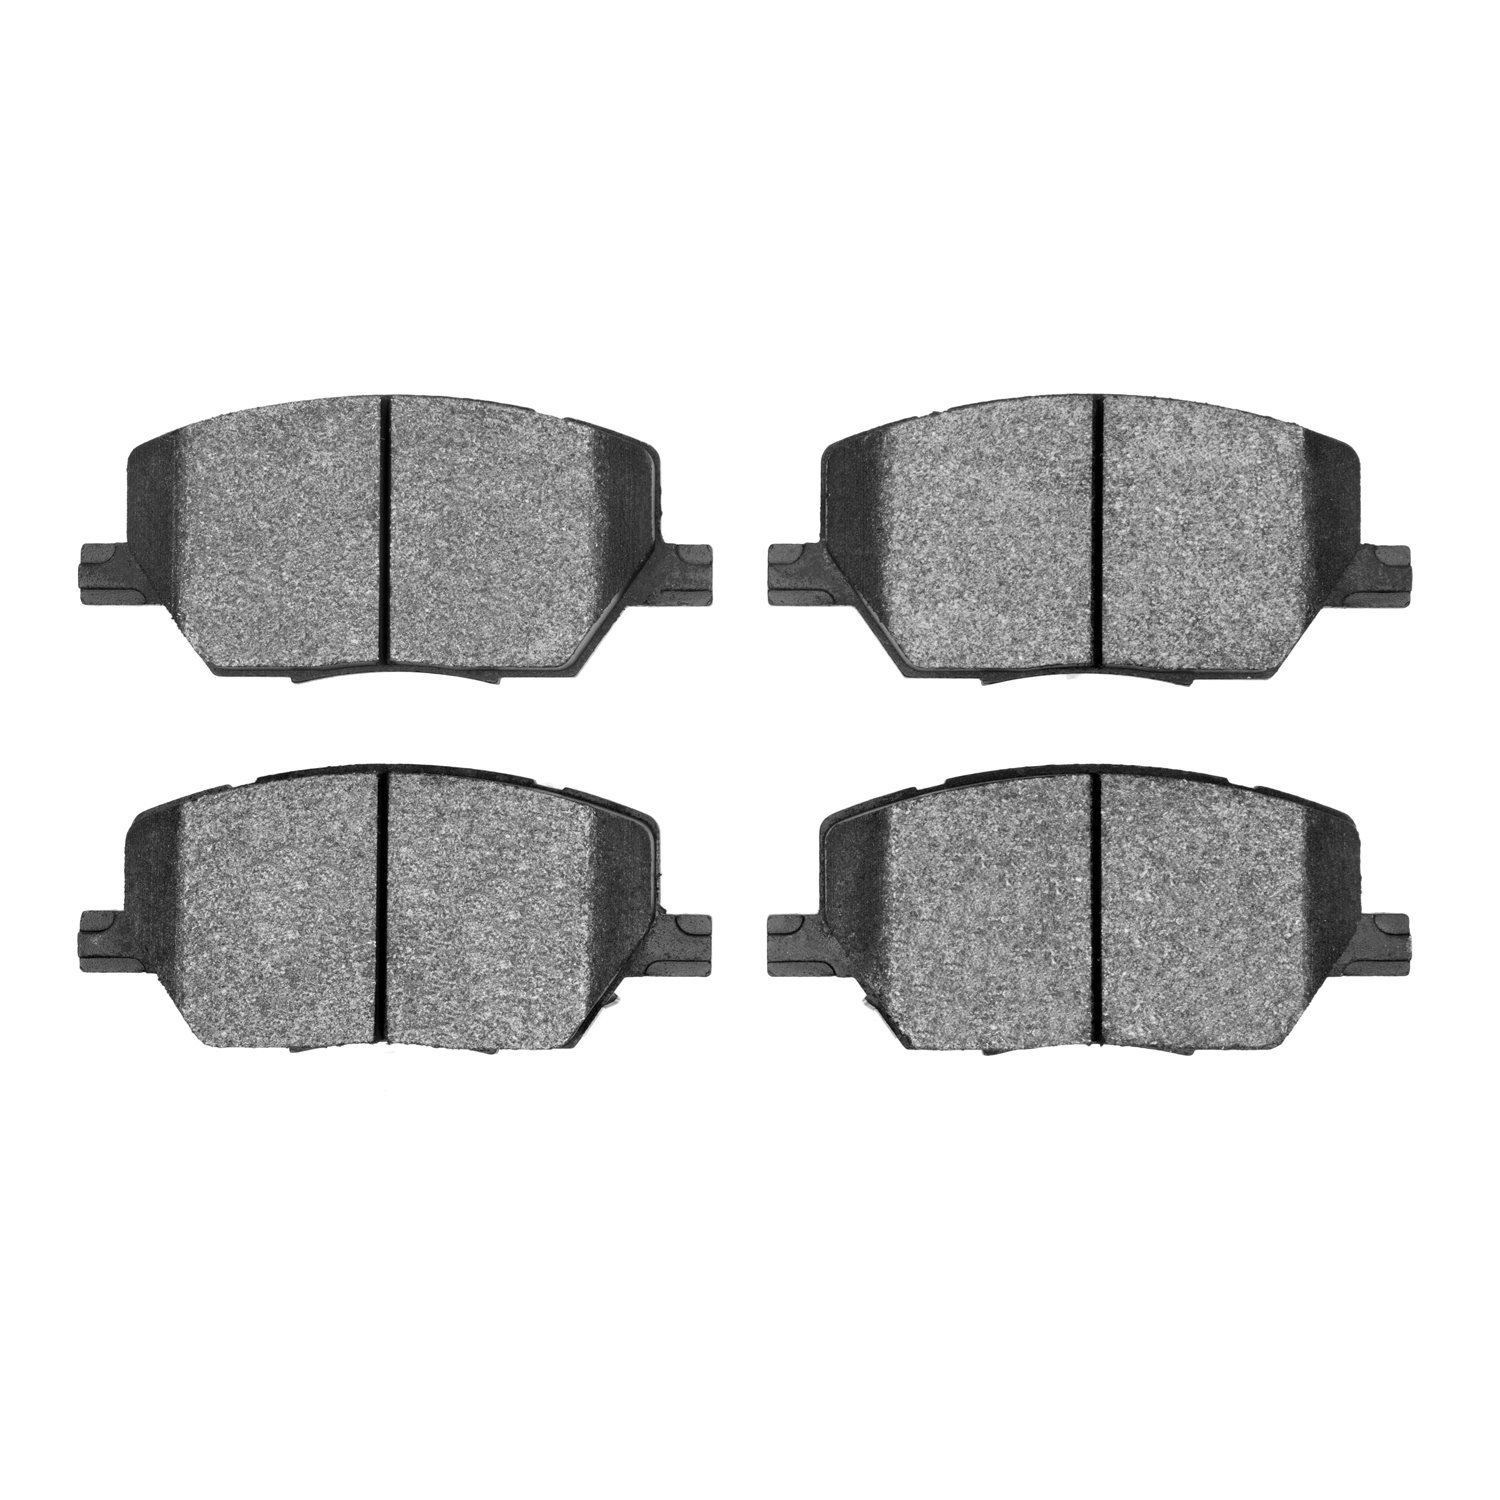 1310-1811-00 3000-Series Ceramic Brake Pads, Fits Select Mopar, Position: Front